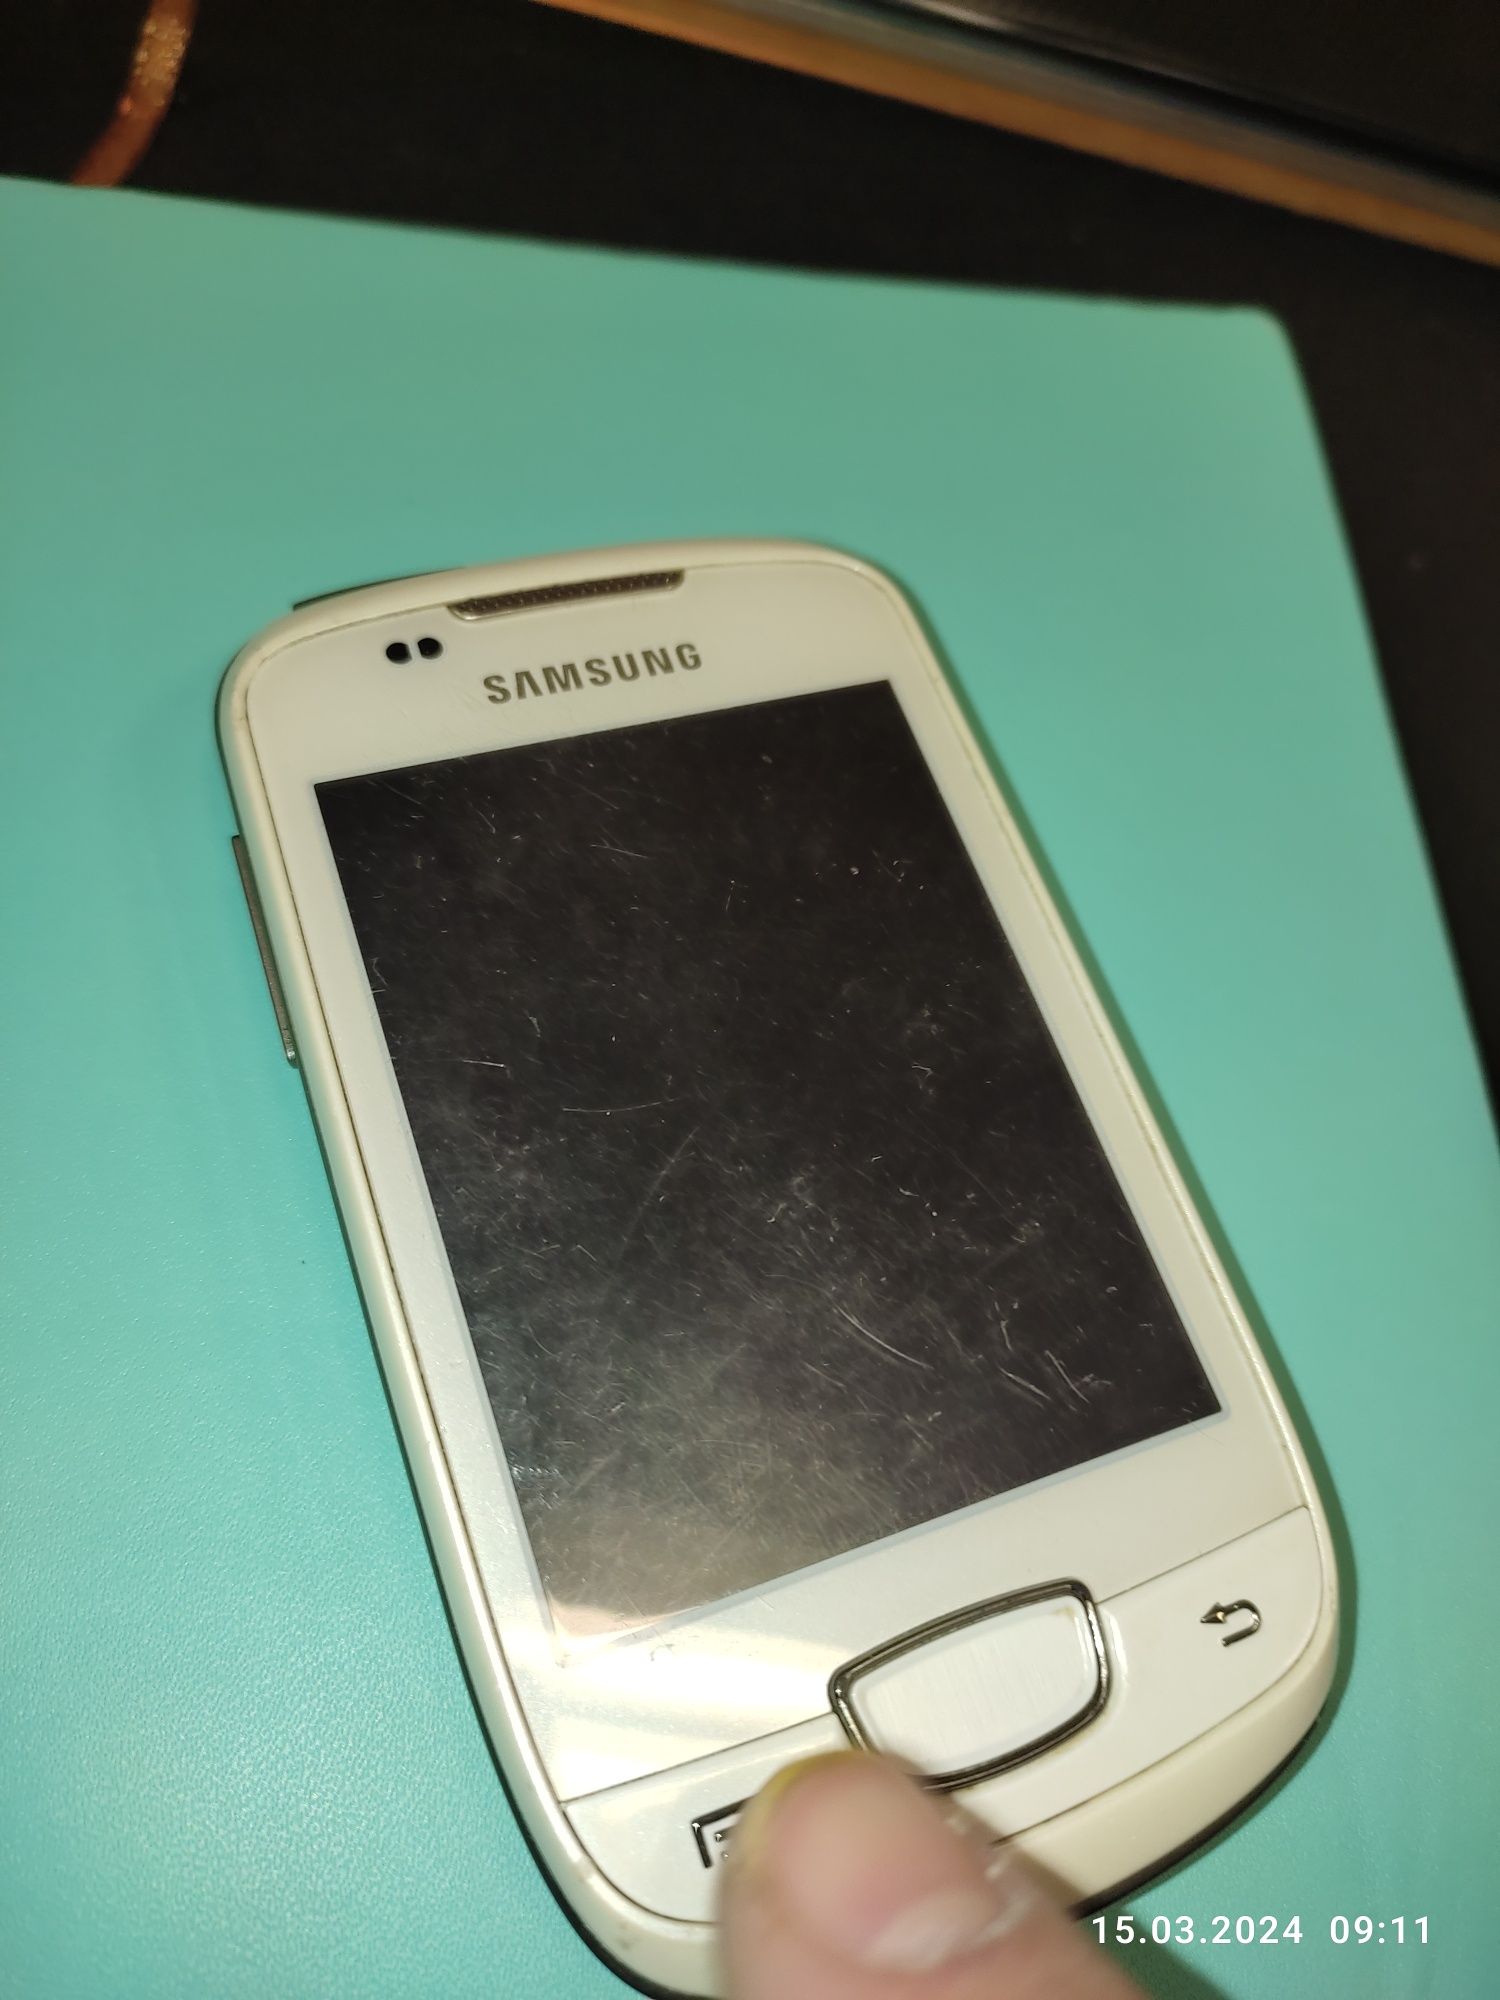 Samsung Galaxy Mini GT S5570